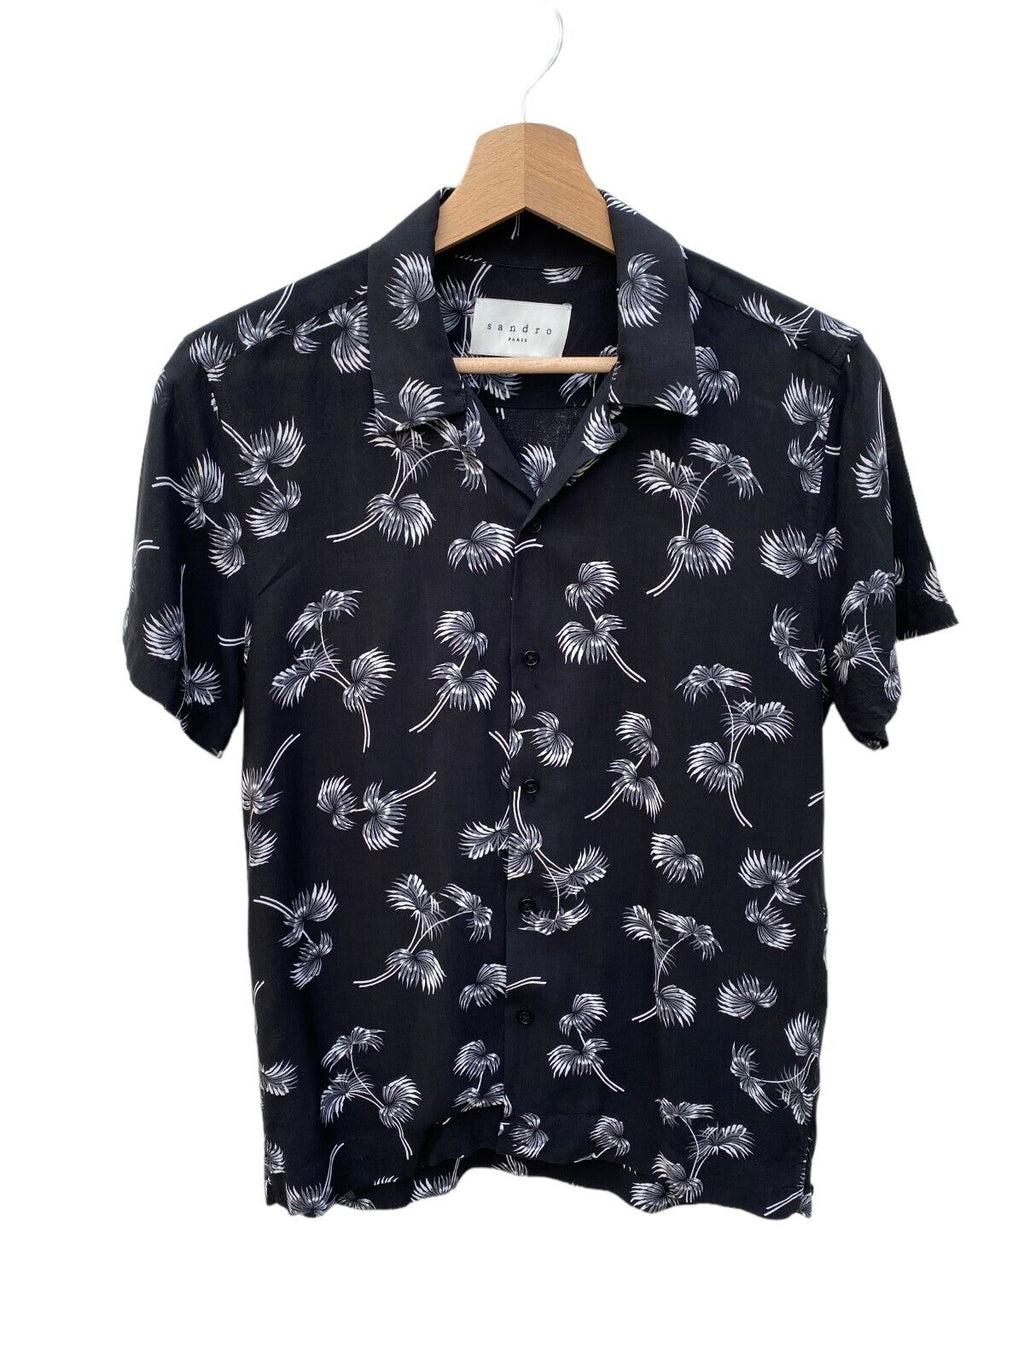 Black Hawaiian Short Sleeves Shirt Size S / Small